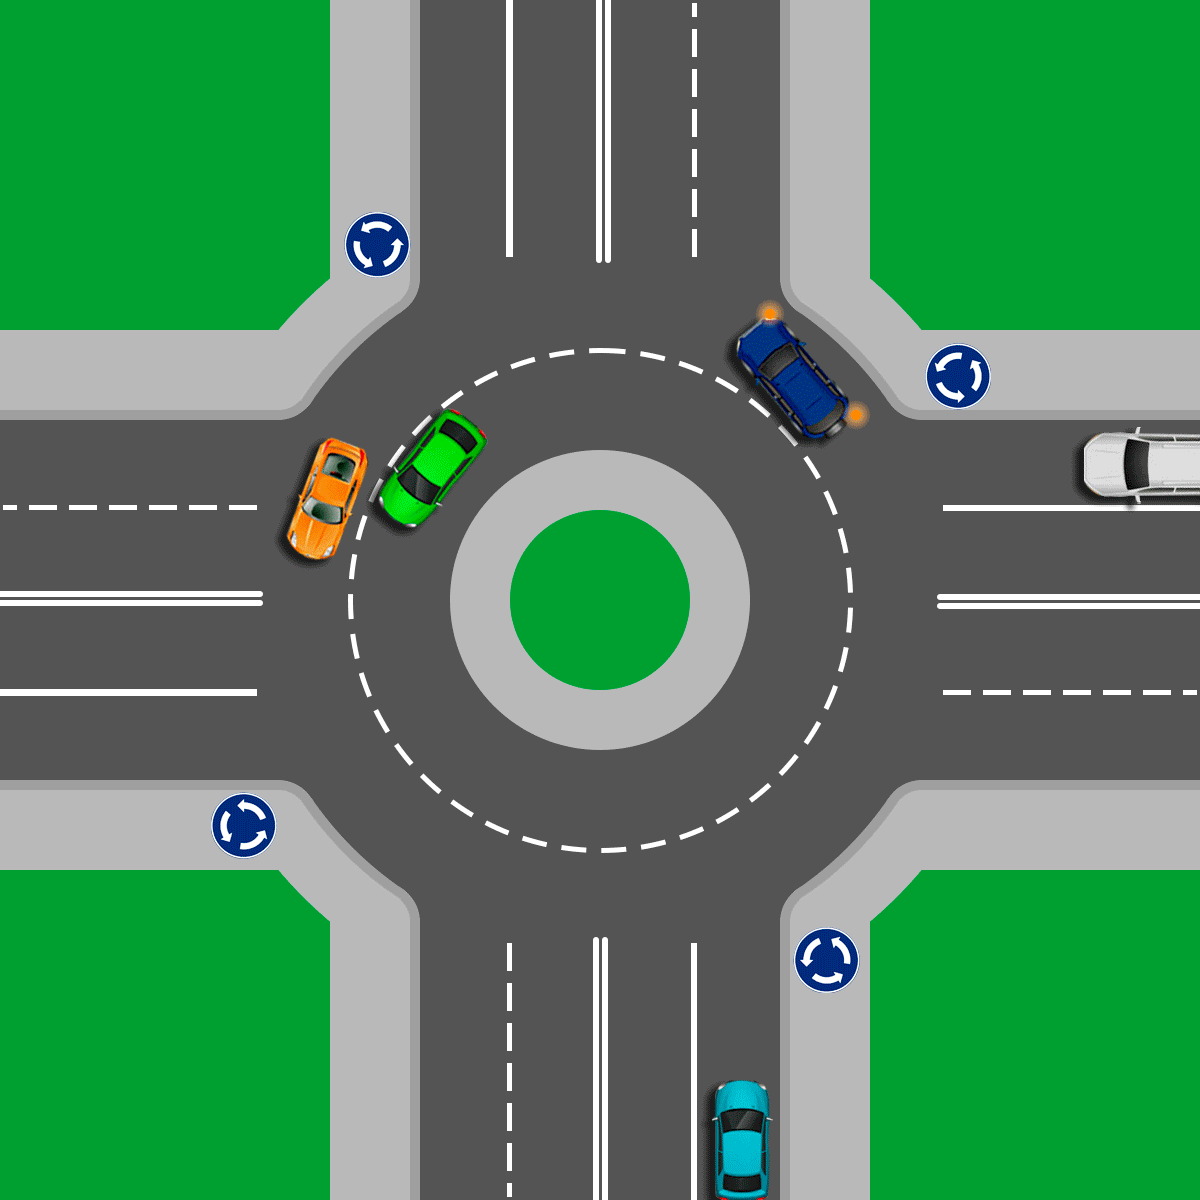 RU_Roundabout_6_Cars.gif